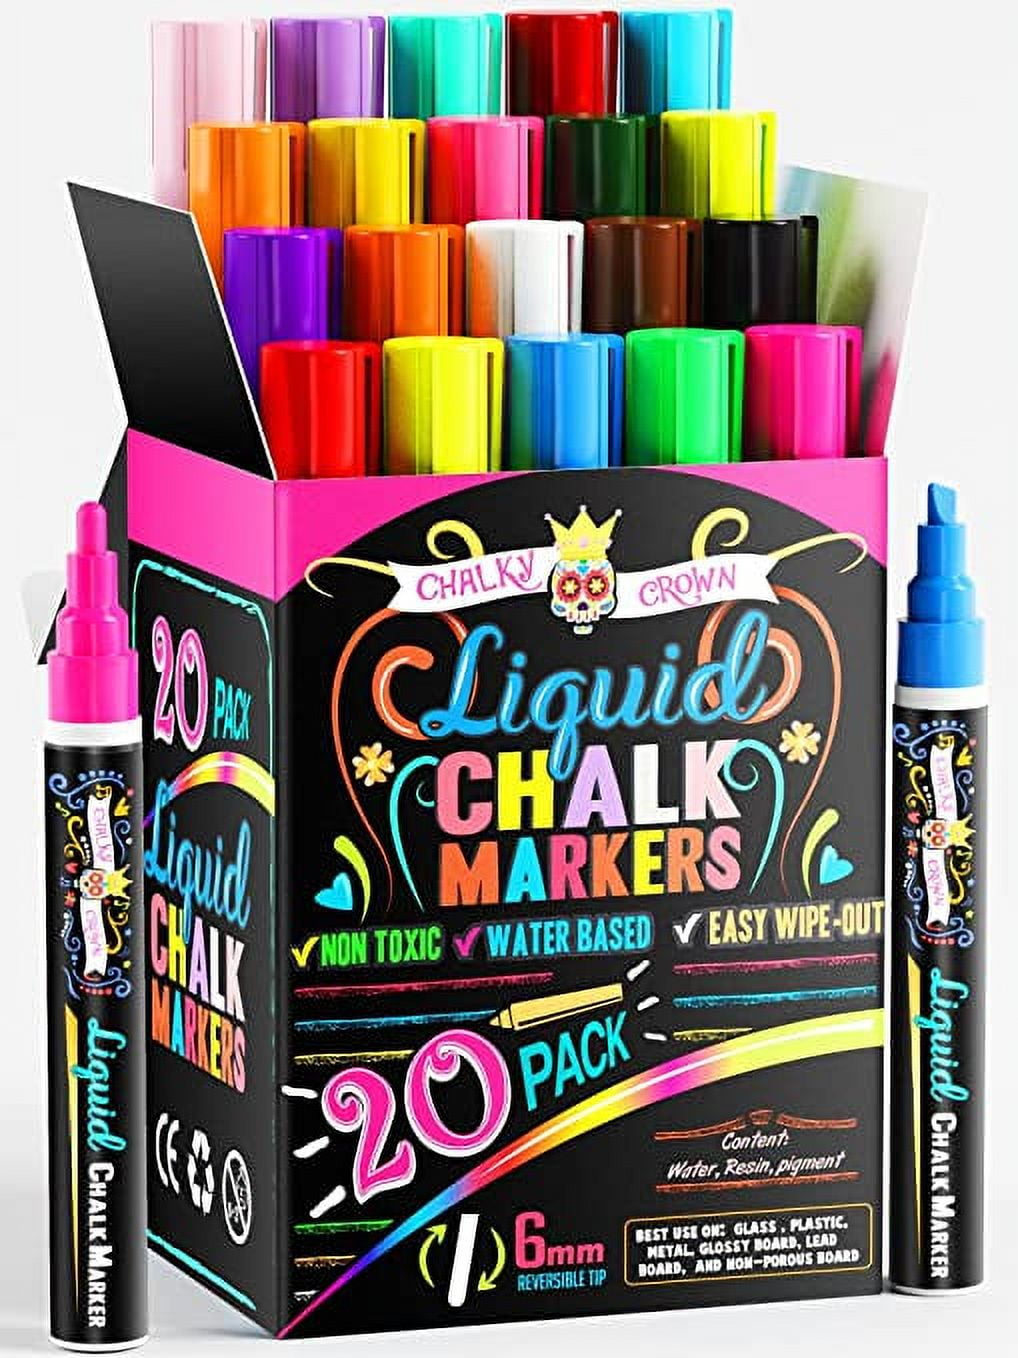 Liquid Chalk & Dry Erase Markers, Five Below